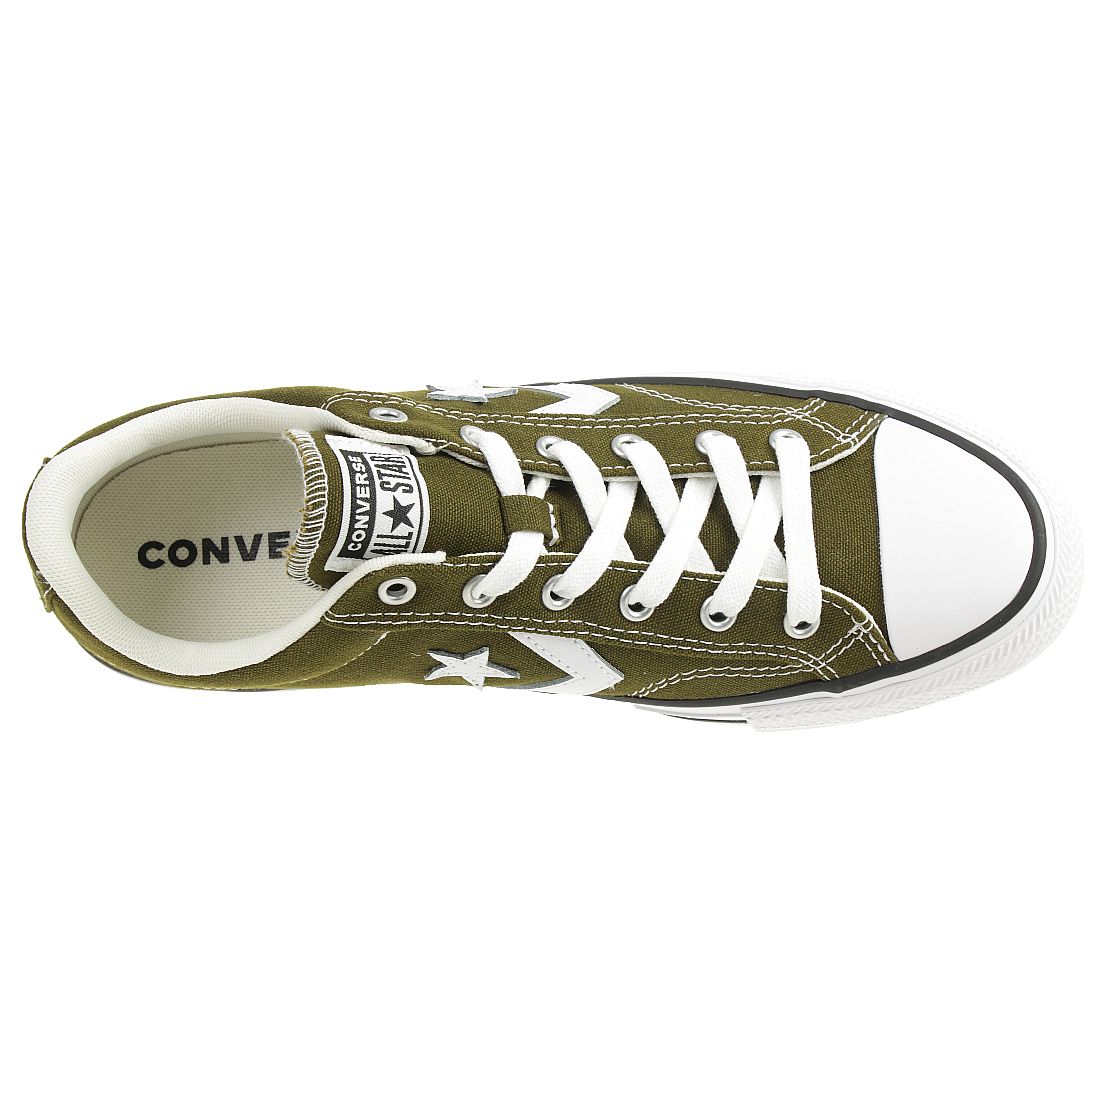 Converse STAR PLAYER OX Schuhe Sneaker Canvas Unisex Olive 165460C Gr. 36,5